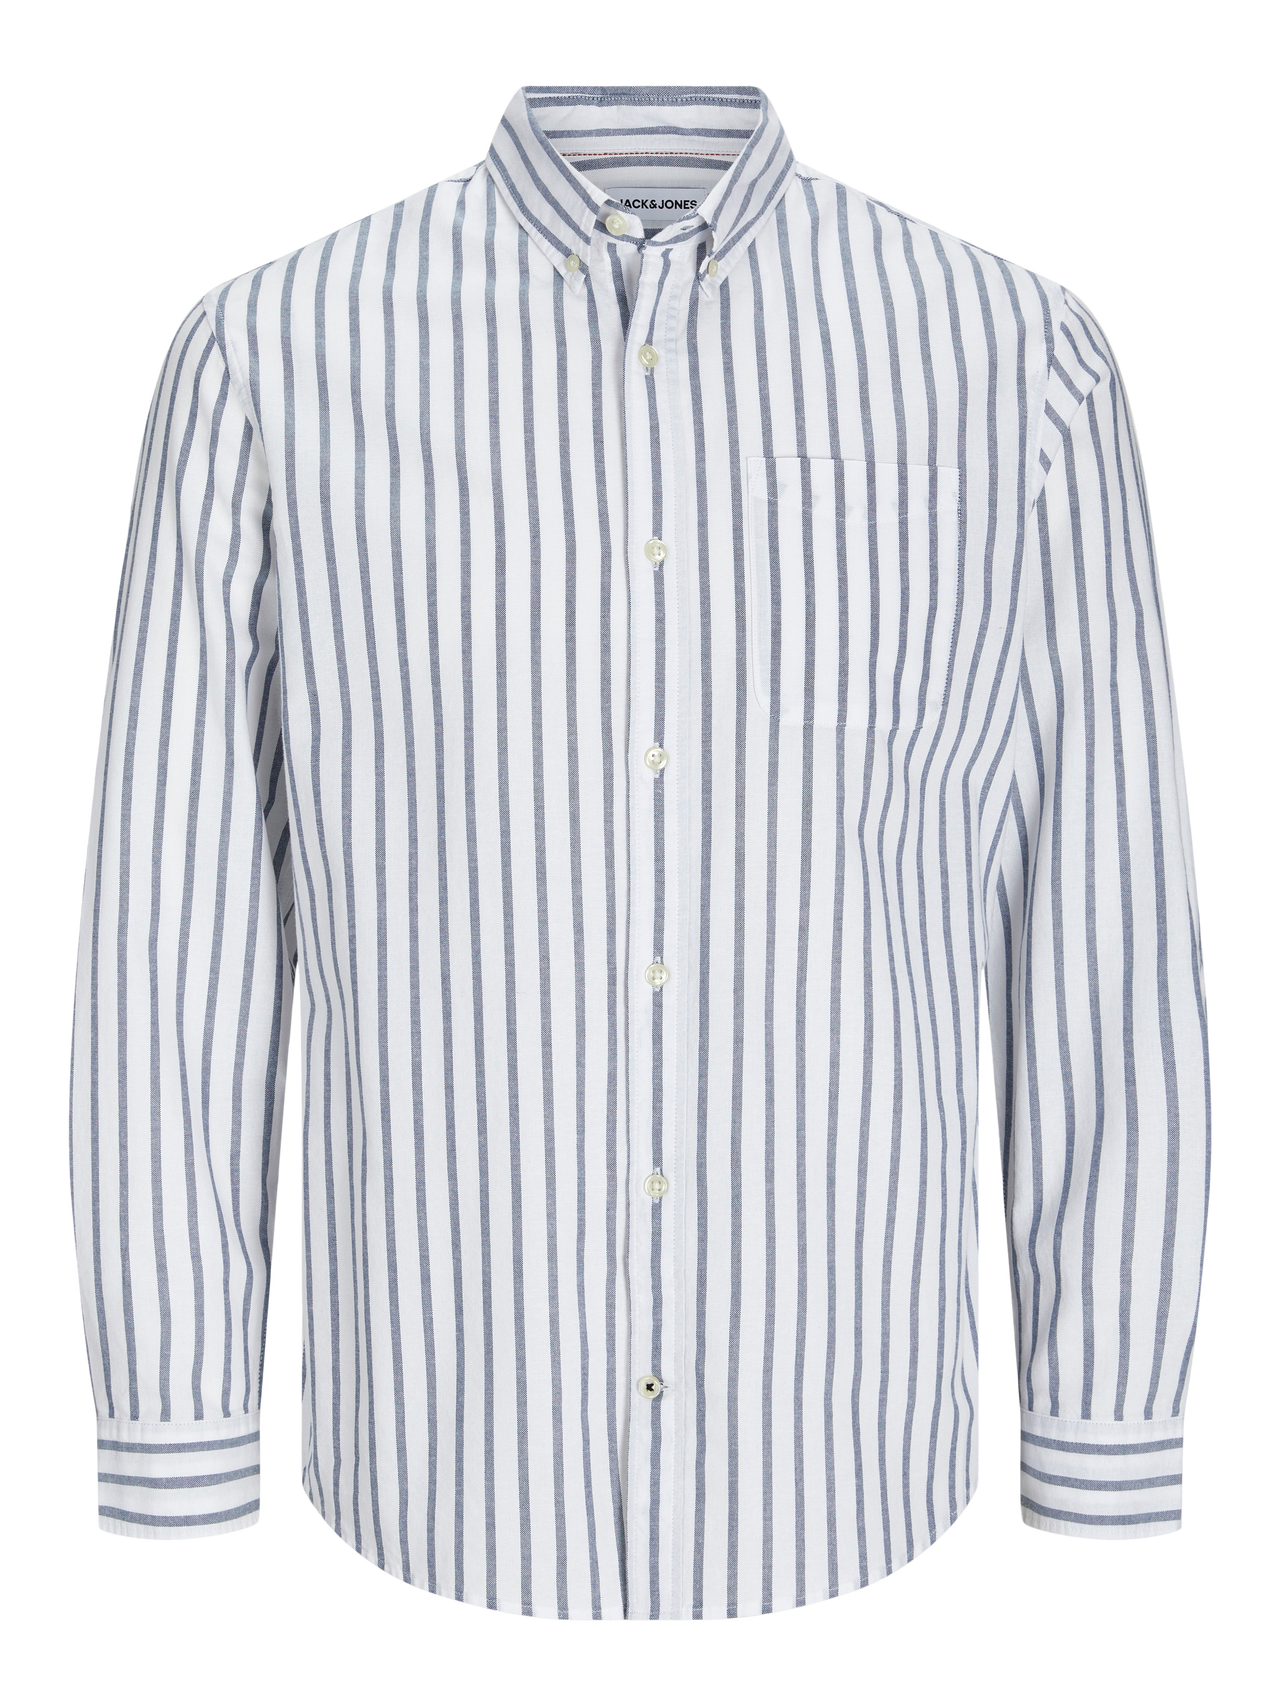 Jack & Jones Slim Fit Casual shirt -Ensign Blue - 12182486